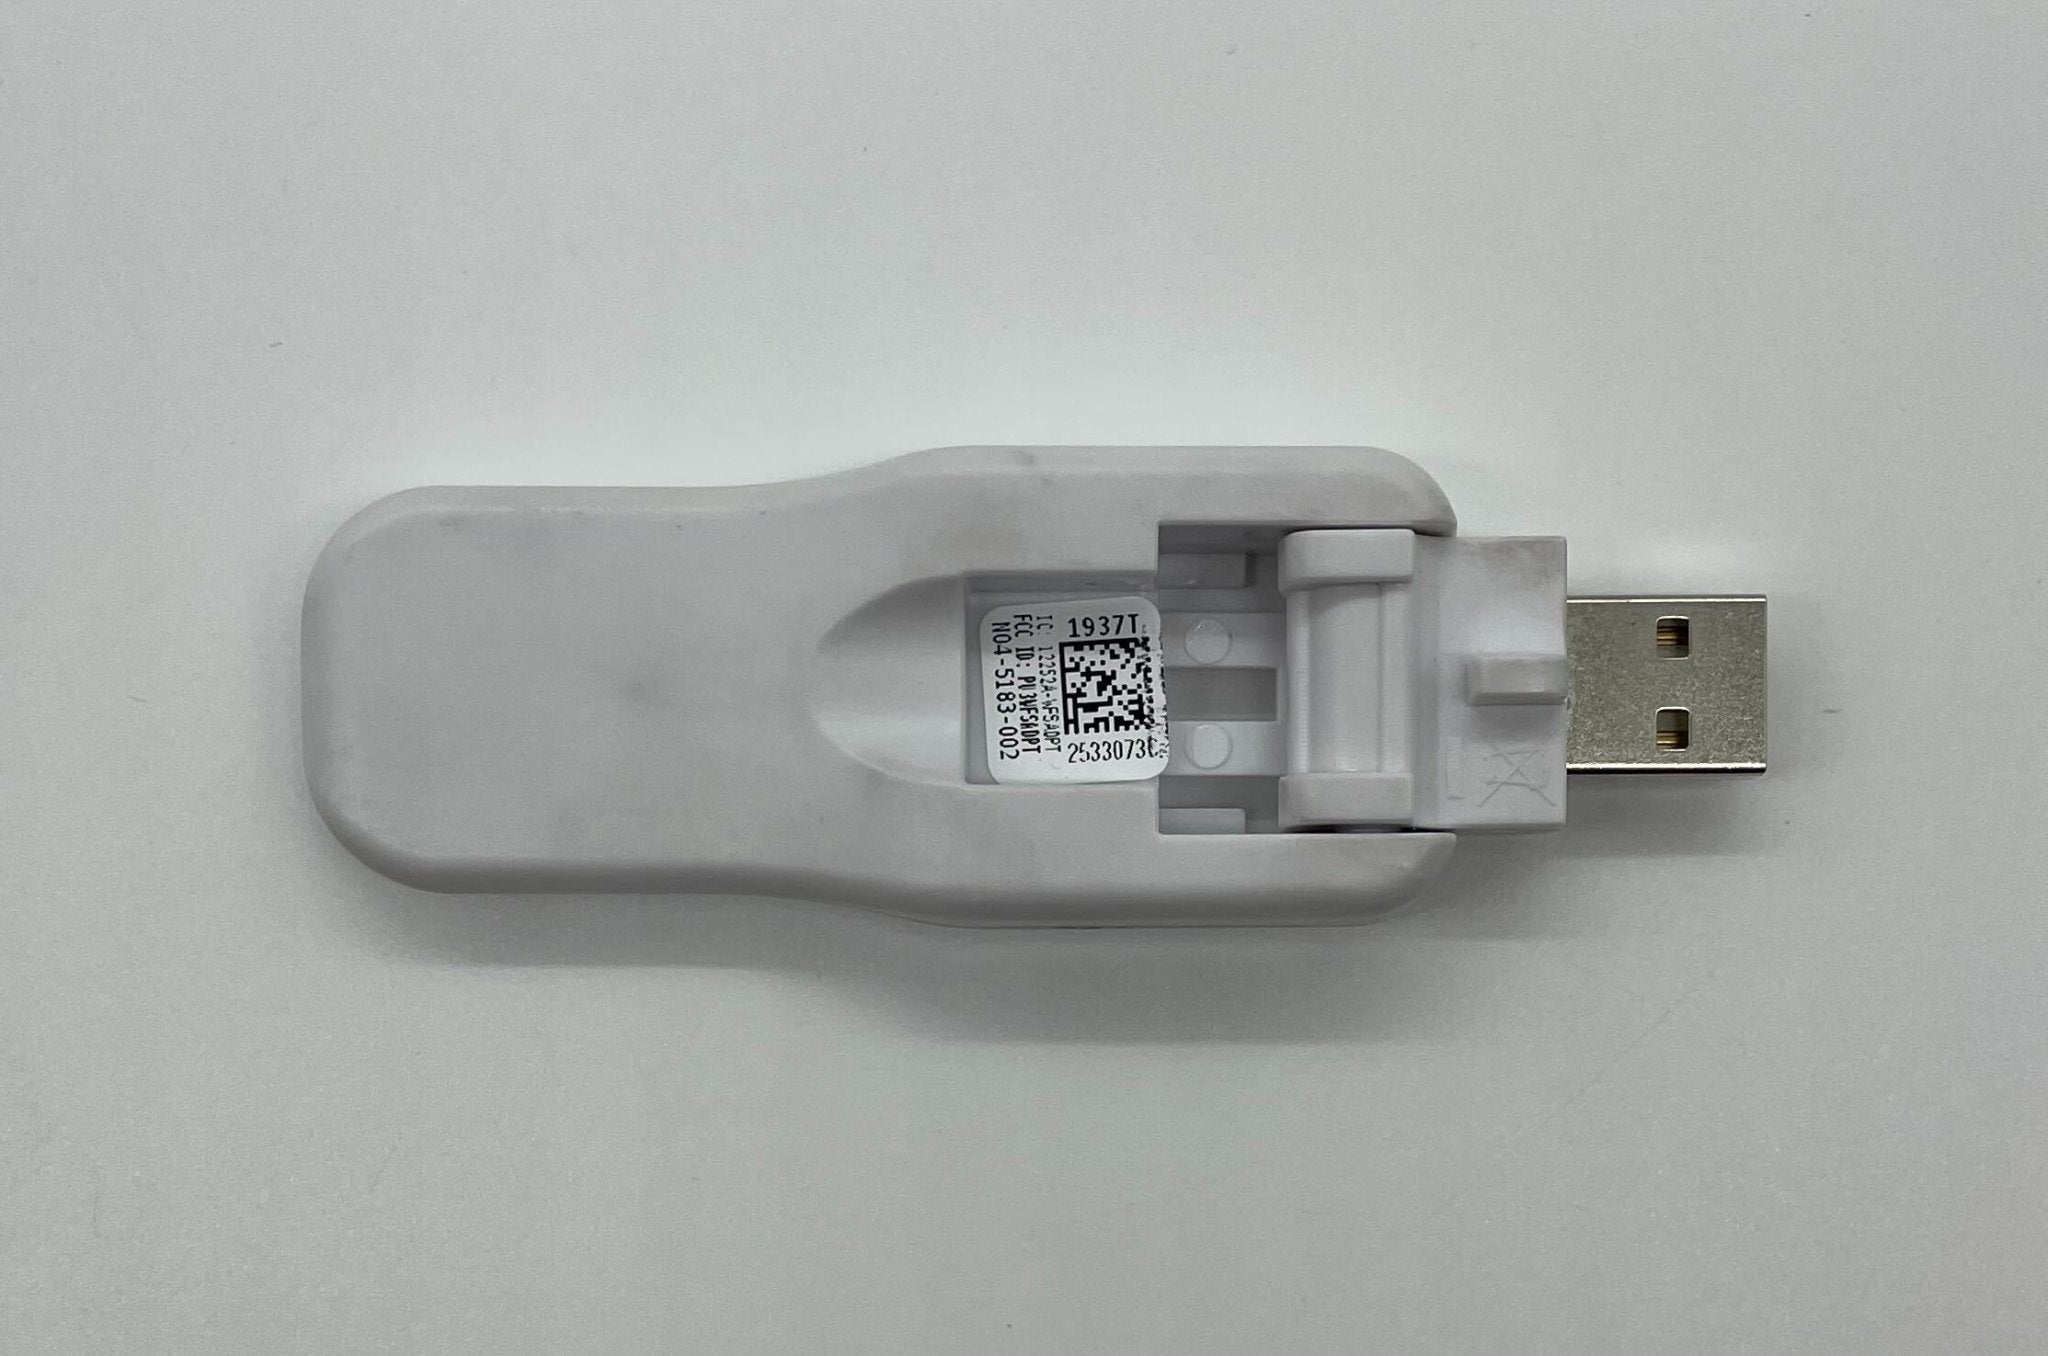 System Sensor W-USB - The Fire Alarm Supplier